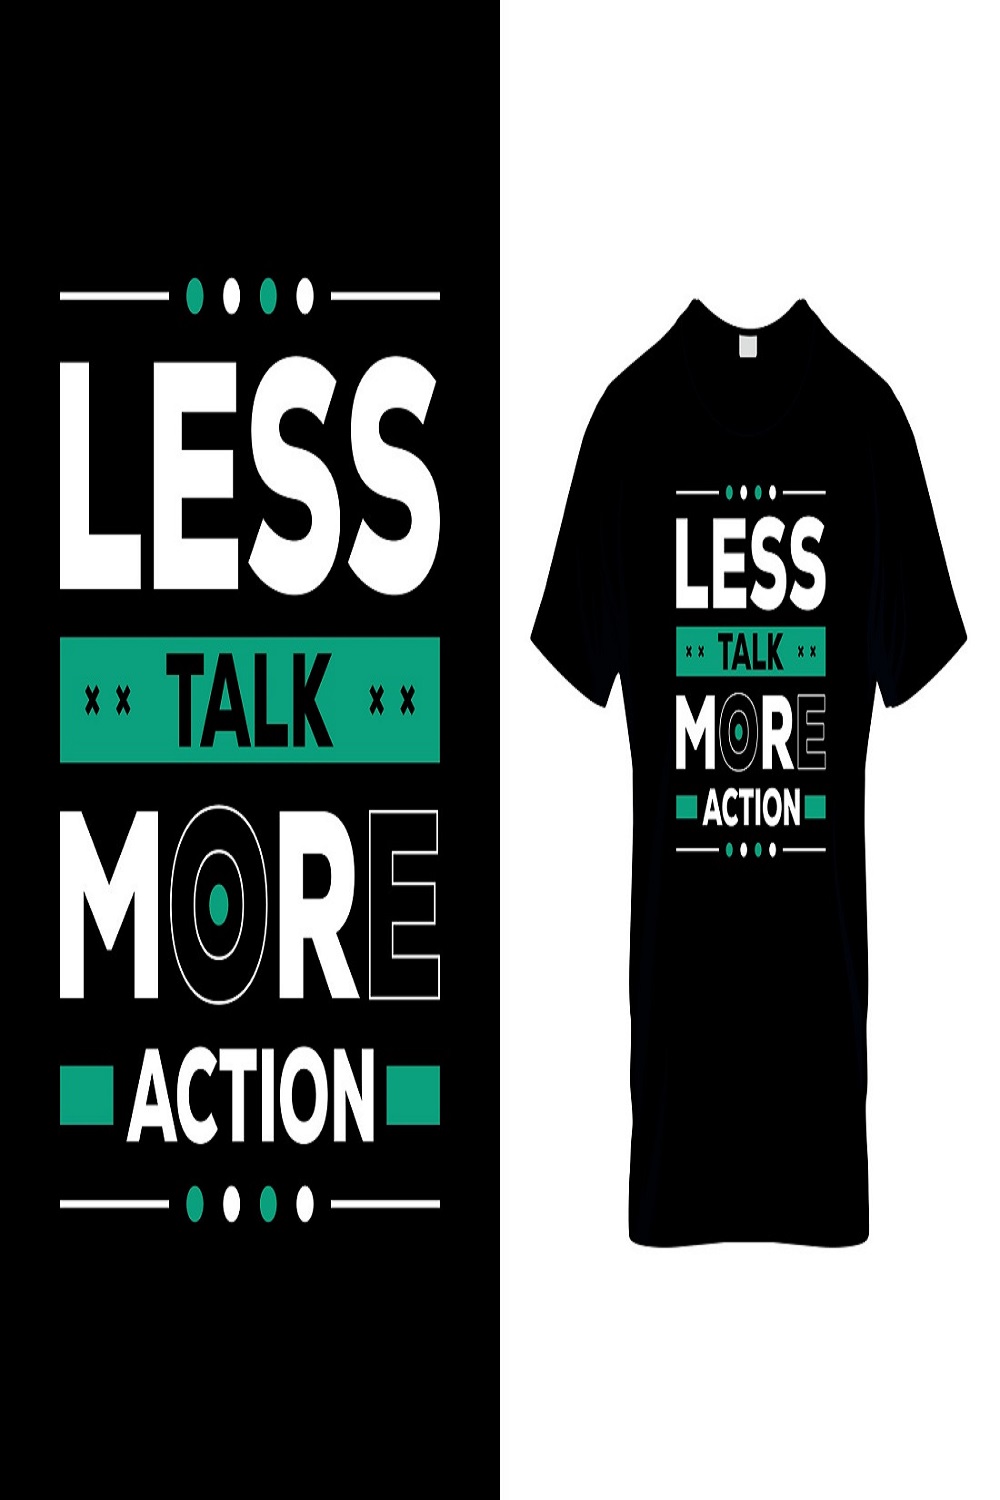 Less talk more action t-shirts design pinterest preview image.